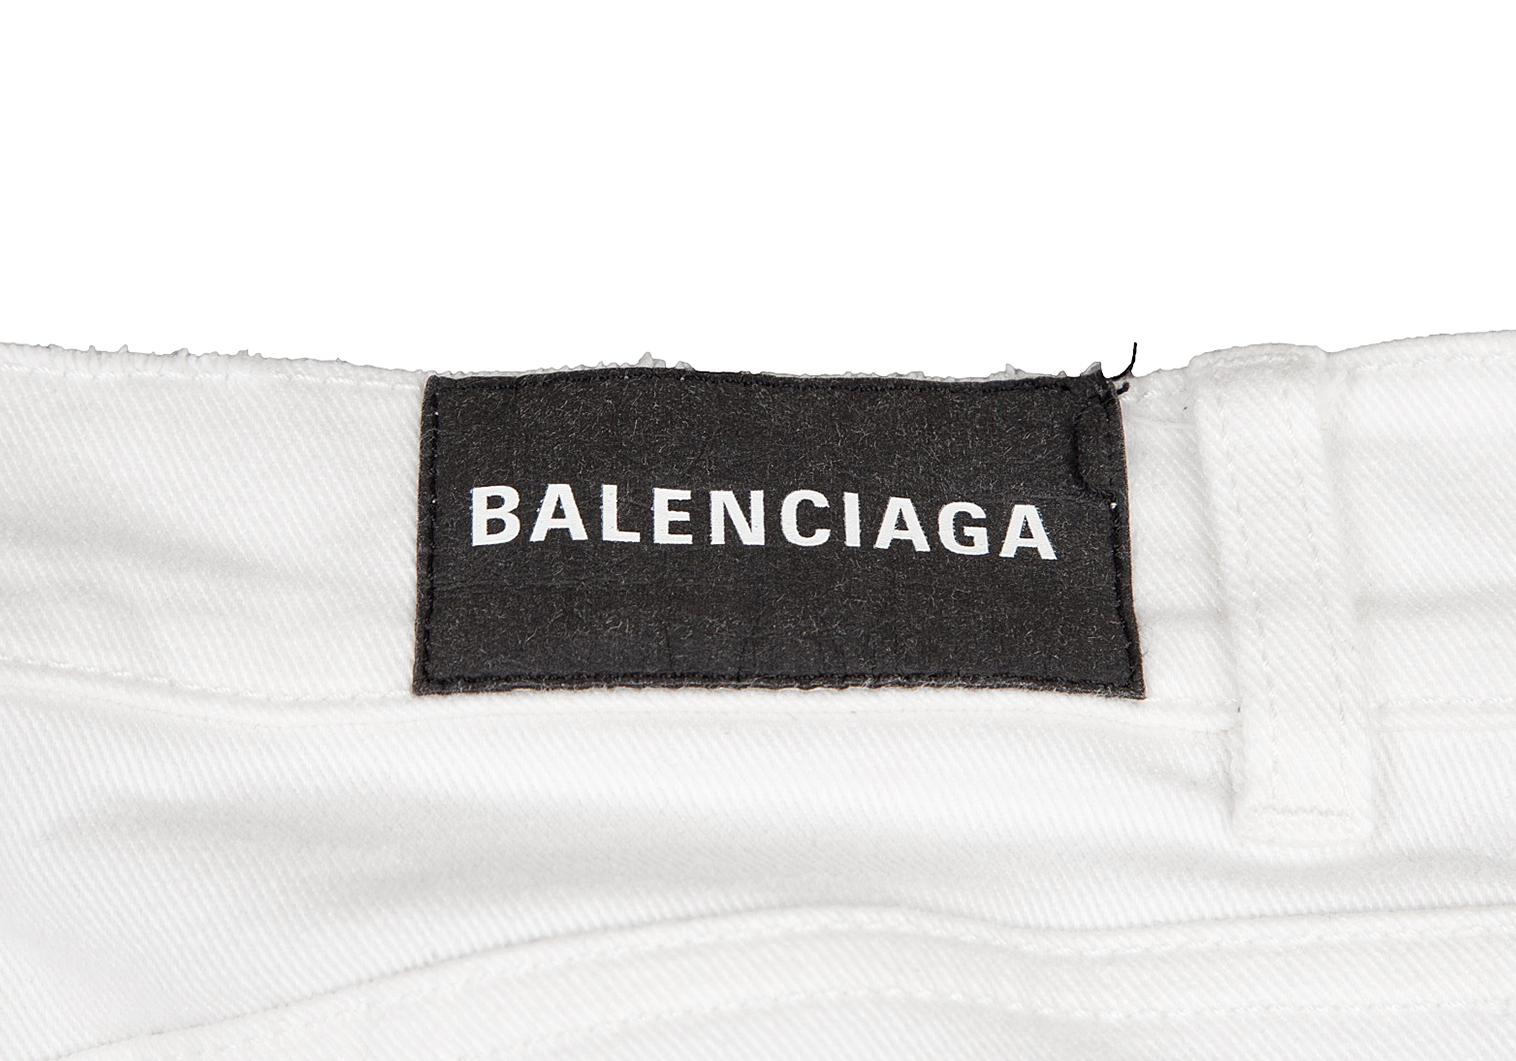 balenciaga レイヤード シャツ カーキ 37 バレンシアガ